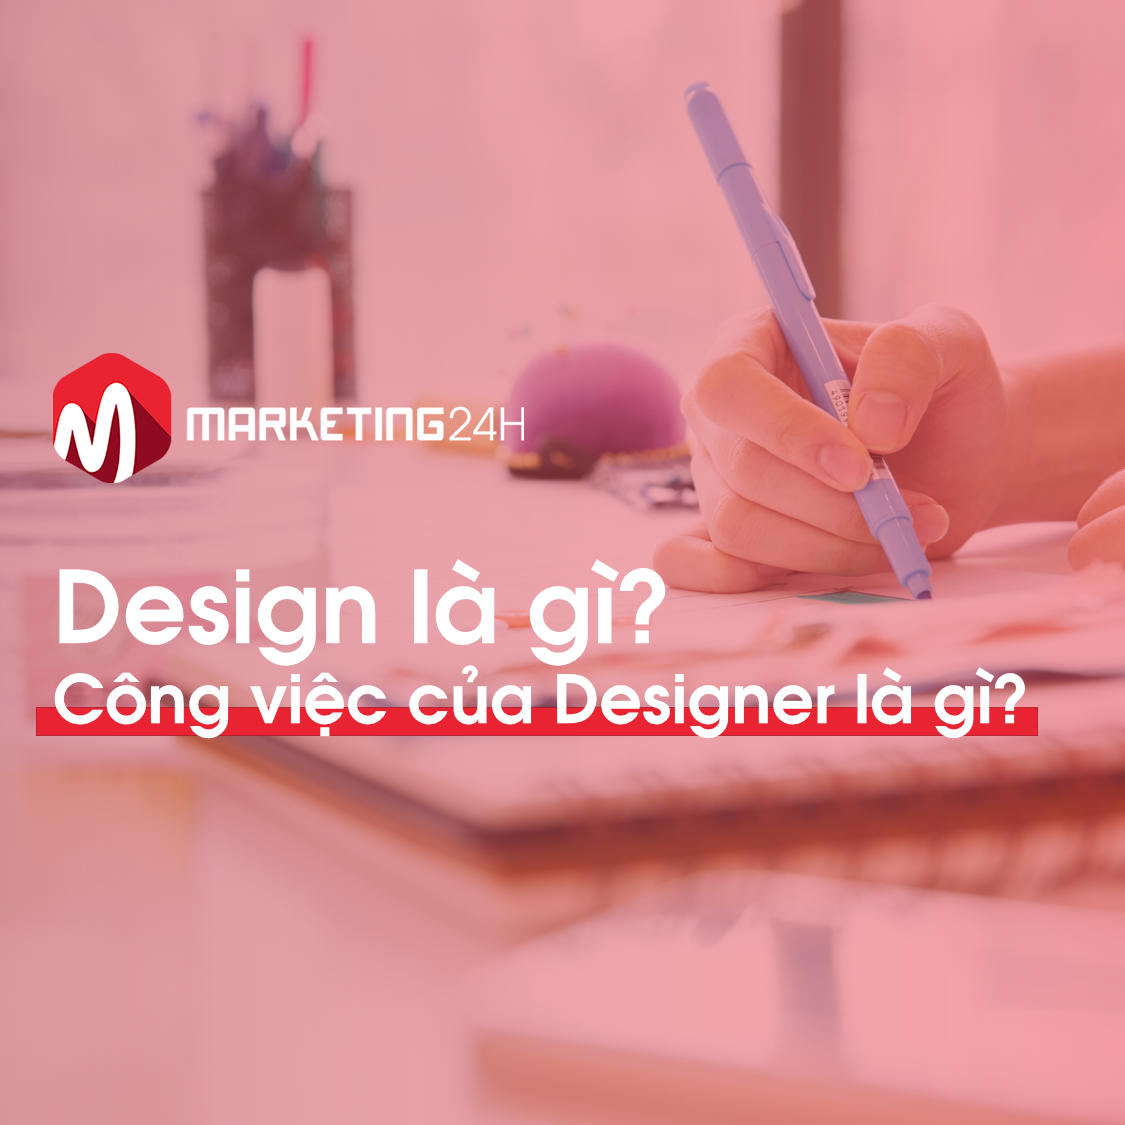 Design-la-gi-Marketing24h.vn